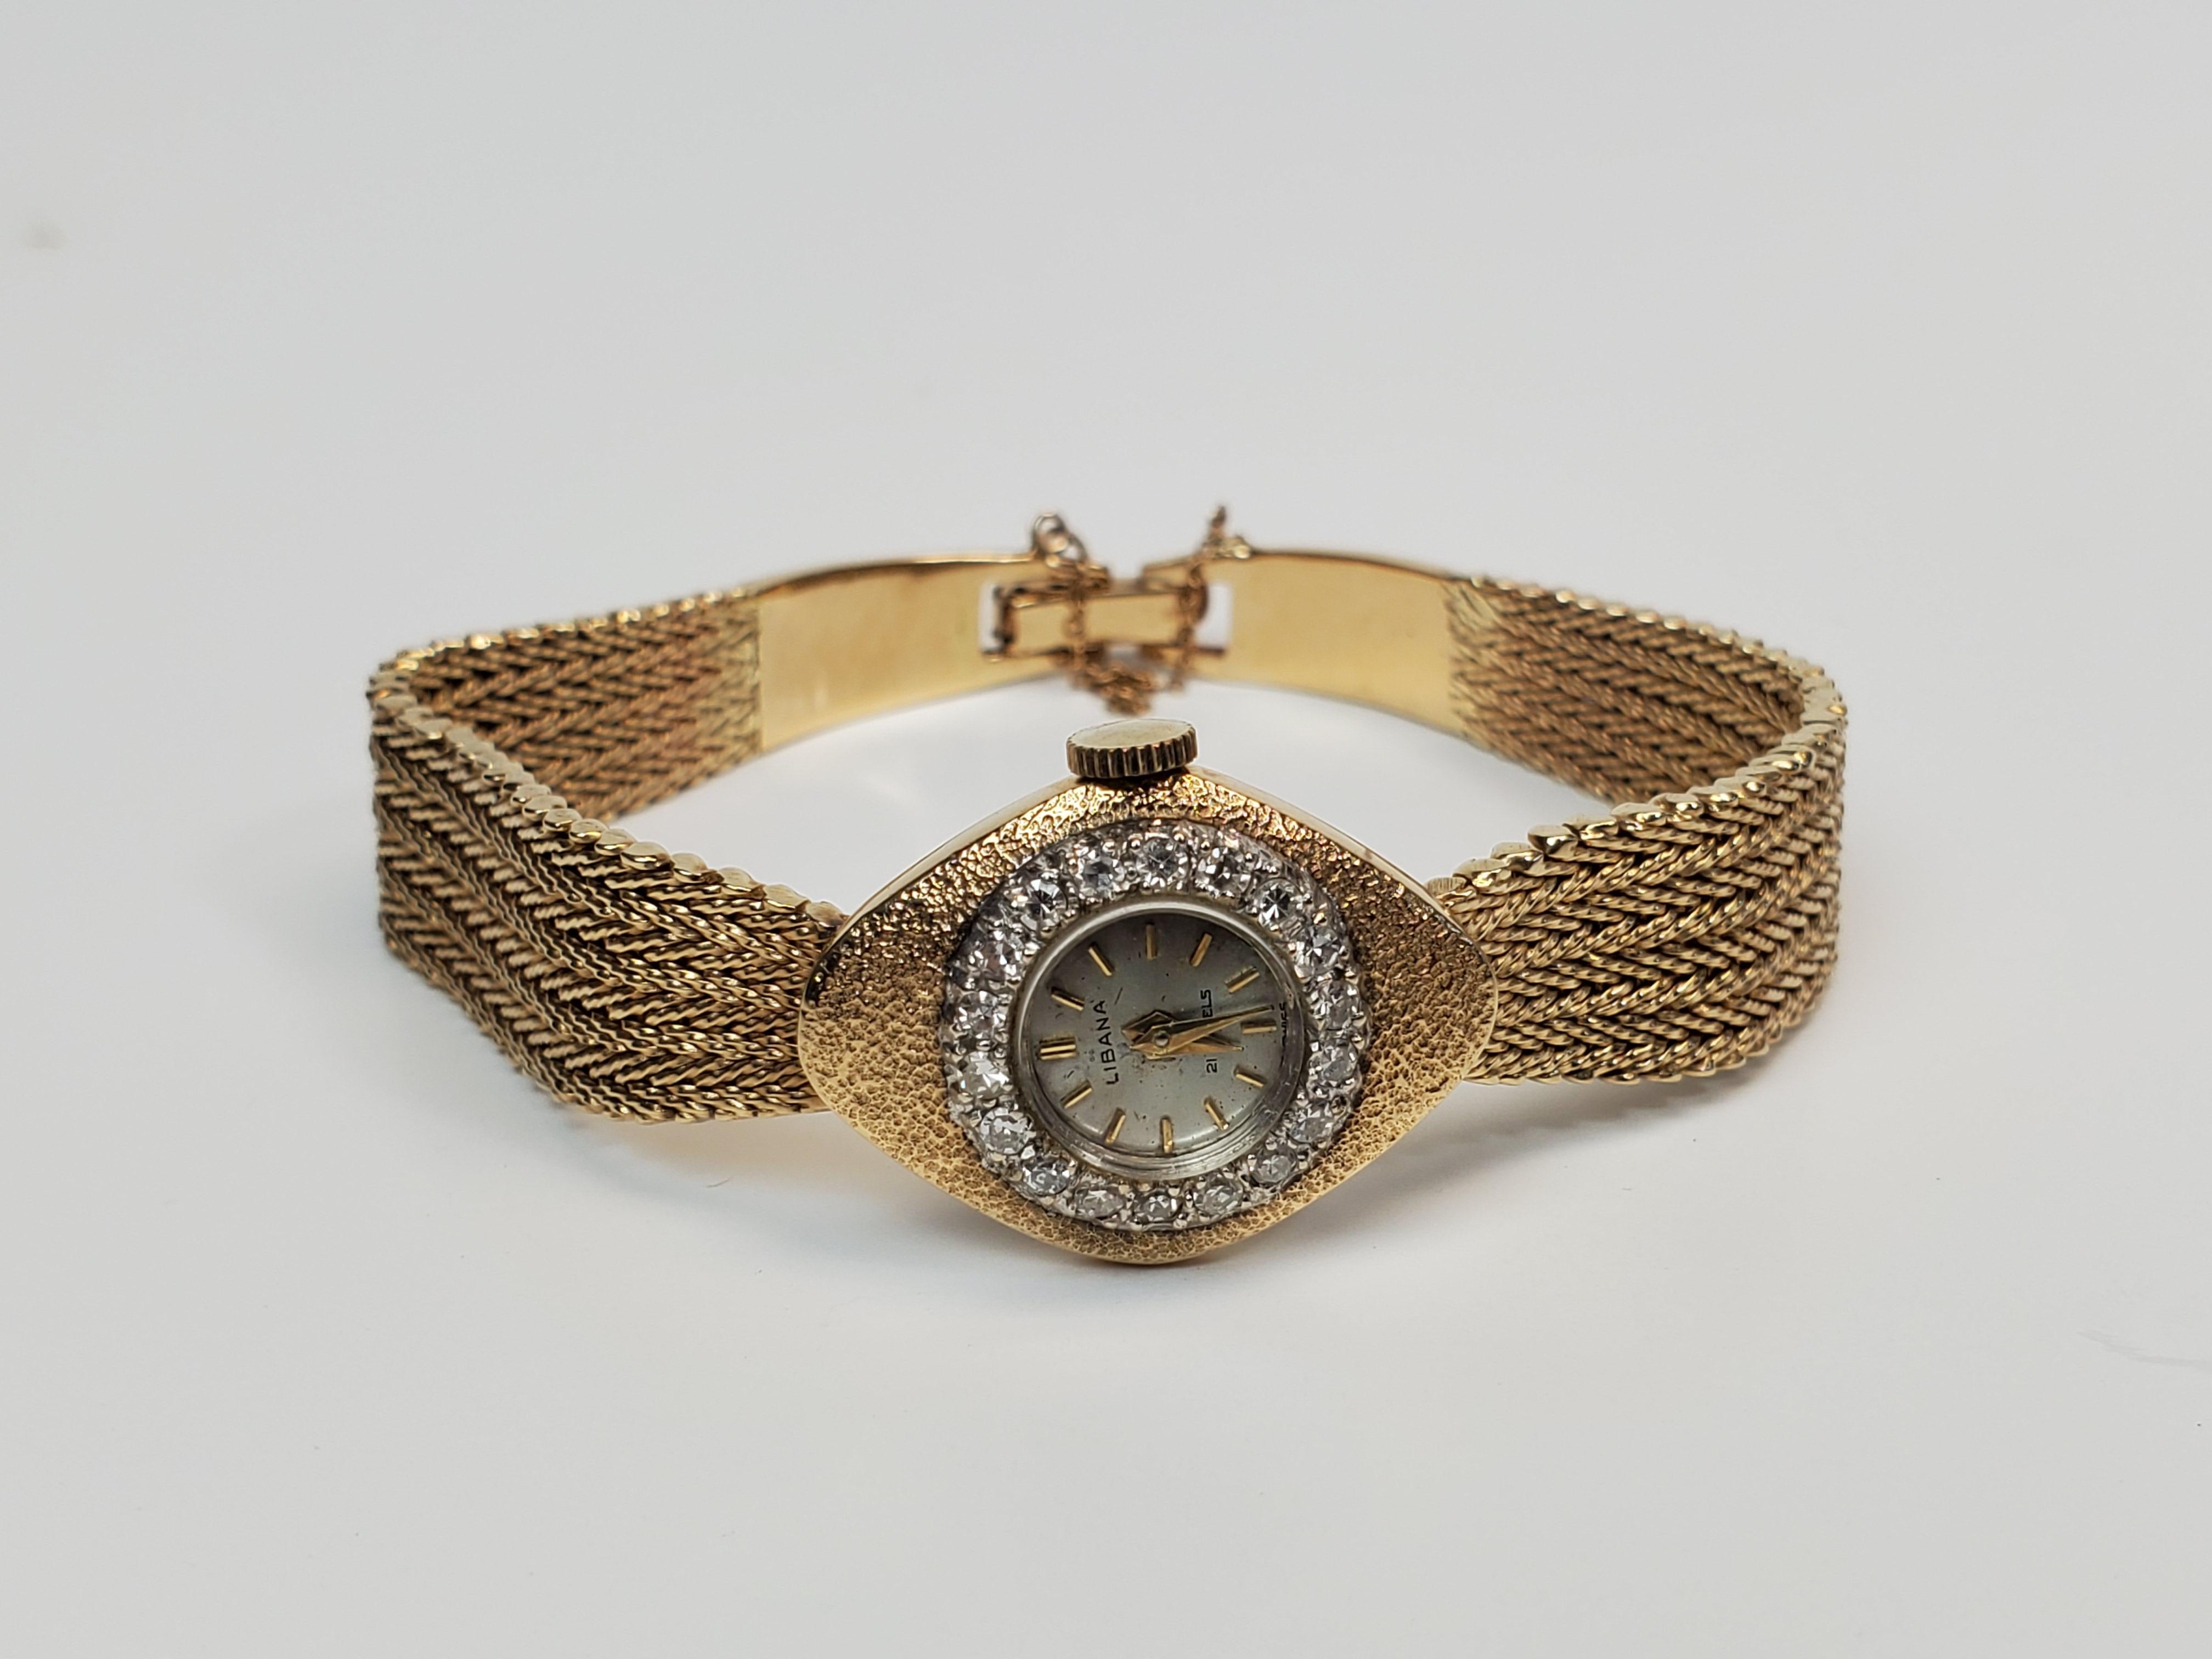 14K Gold Libana ladies wristwatch with diamond bezel around watch face.